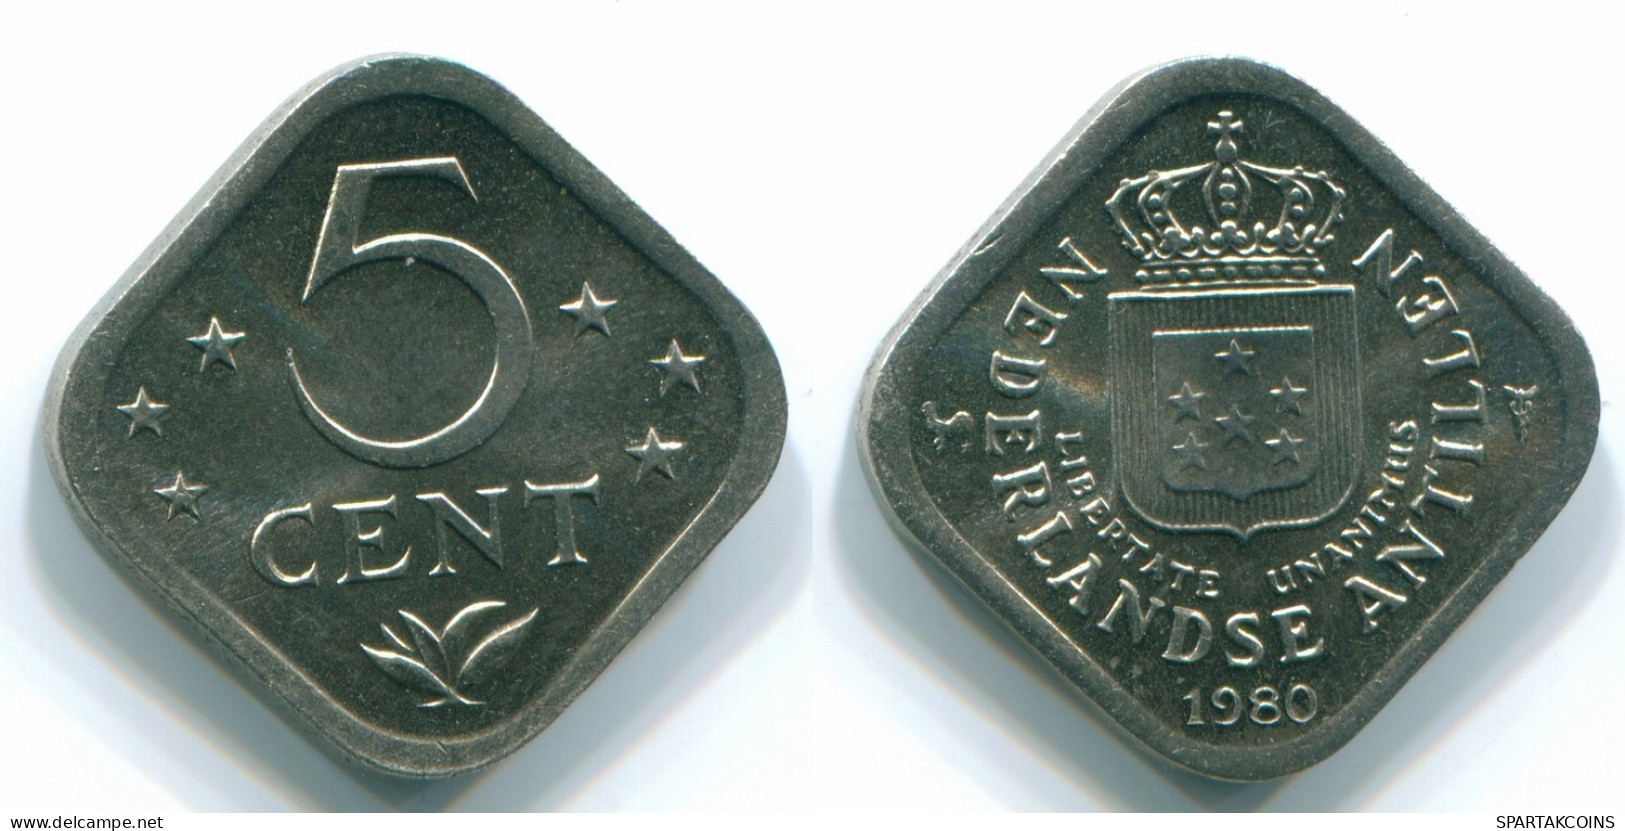 5 CENTS 1980 NETHERLANDS ANTILLES Nickel Colonial Coin #S12311.U.A - Antilles Néerlandaises